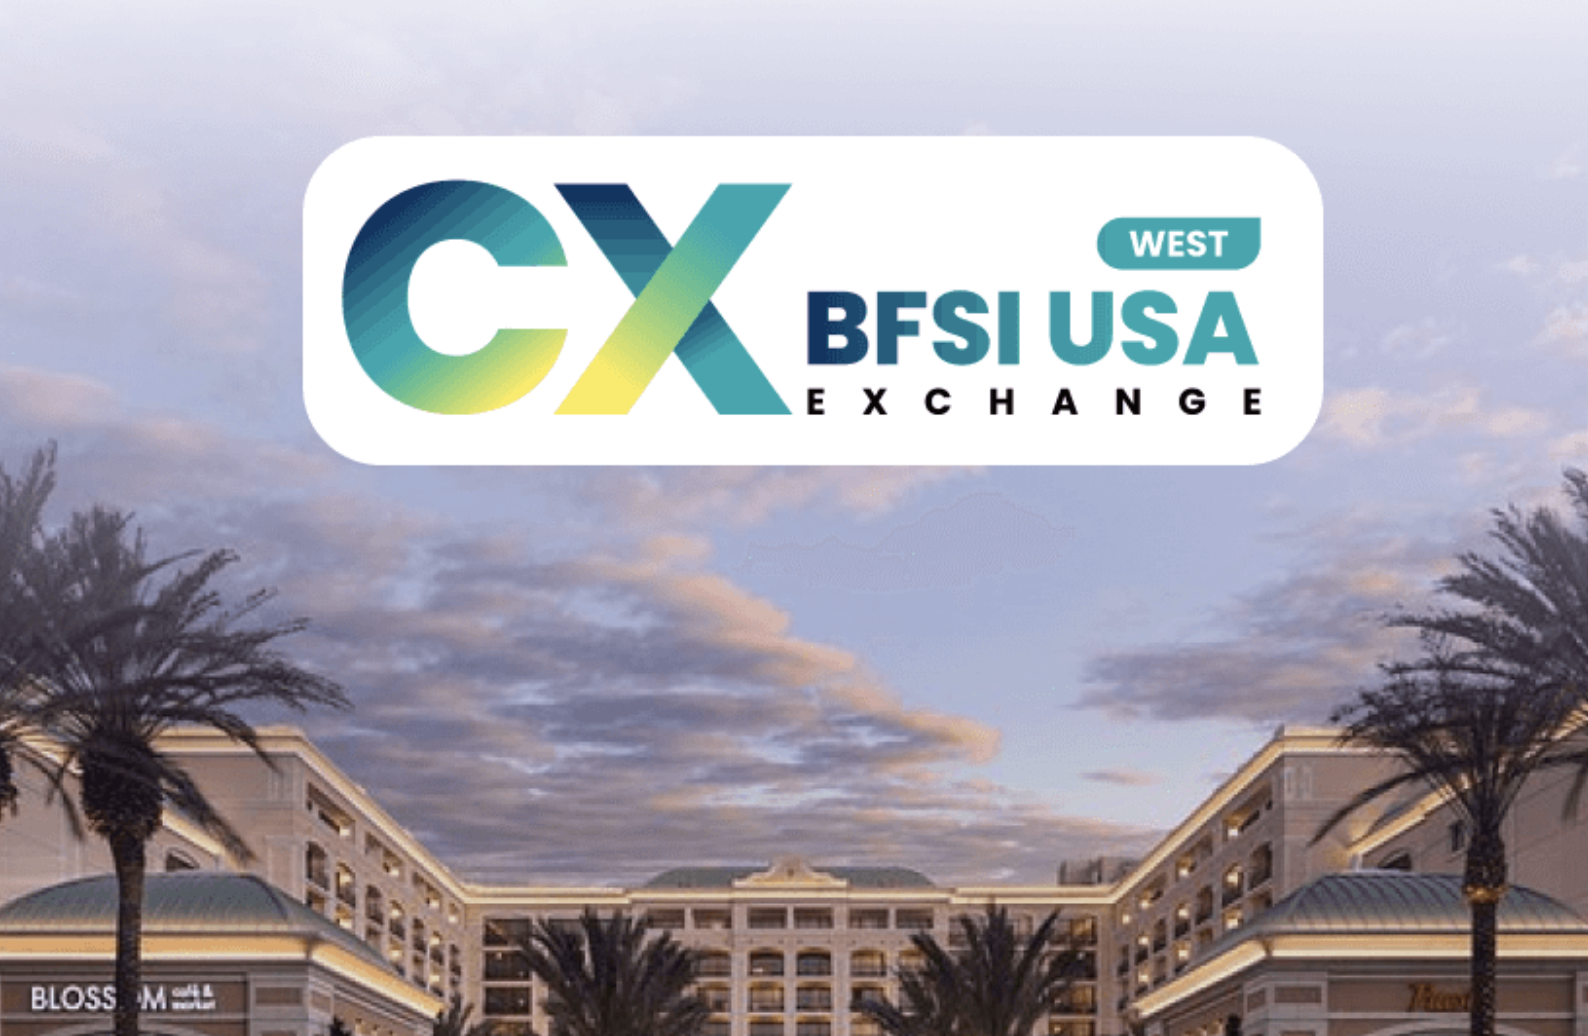 CX BFSI USA Exchange